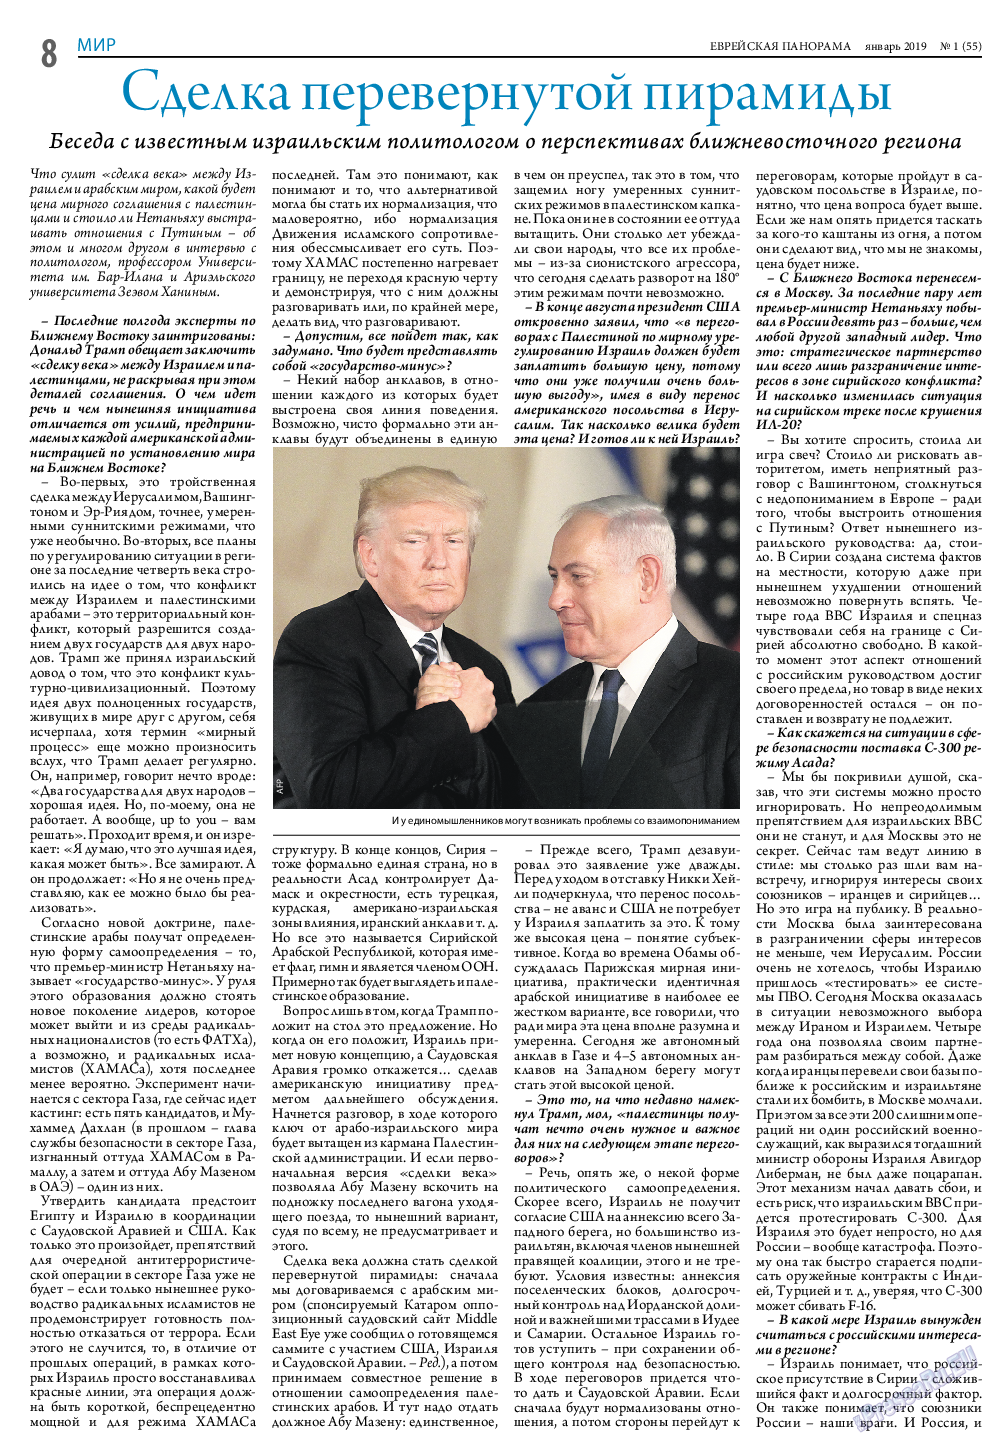 Еврейская панорама, газета. 2019 №1 стр.8